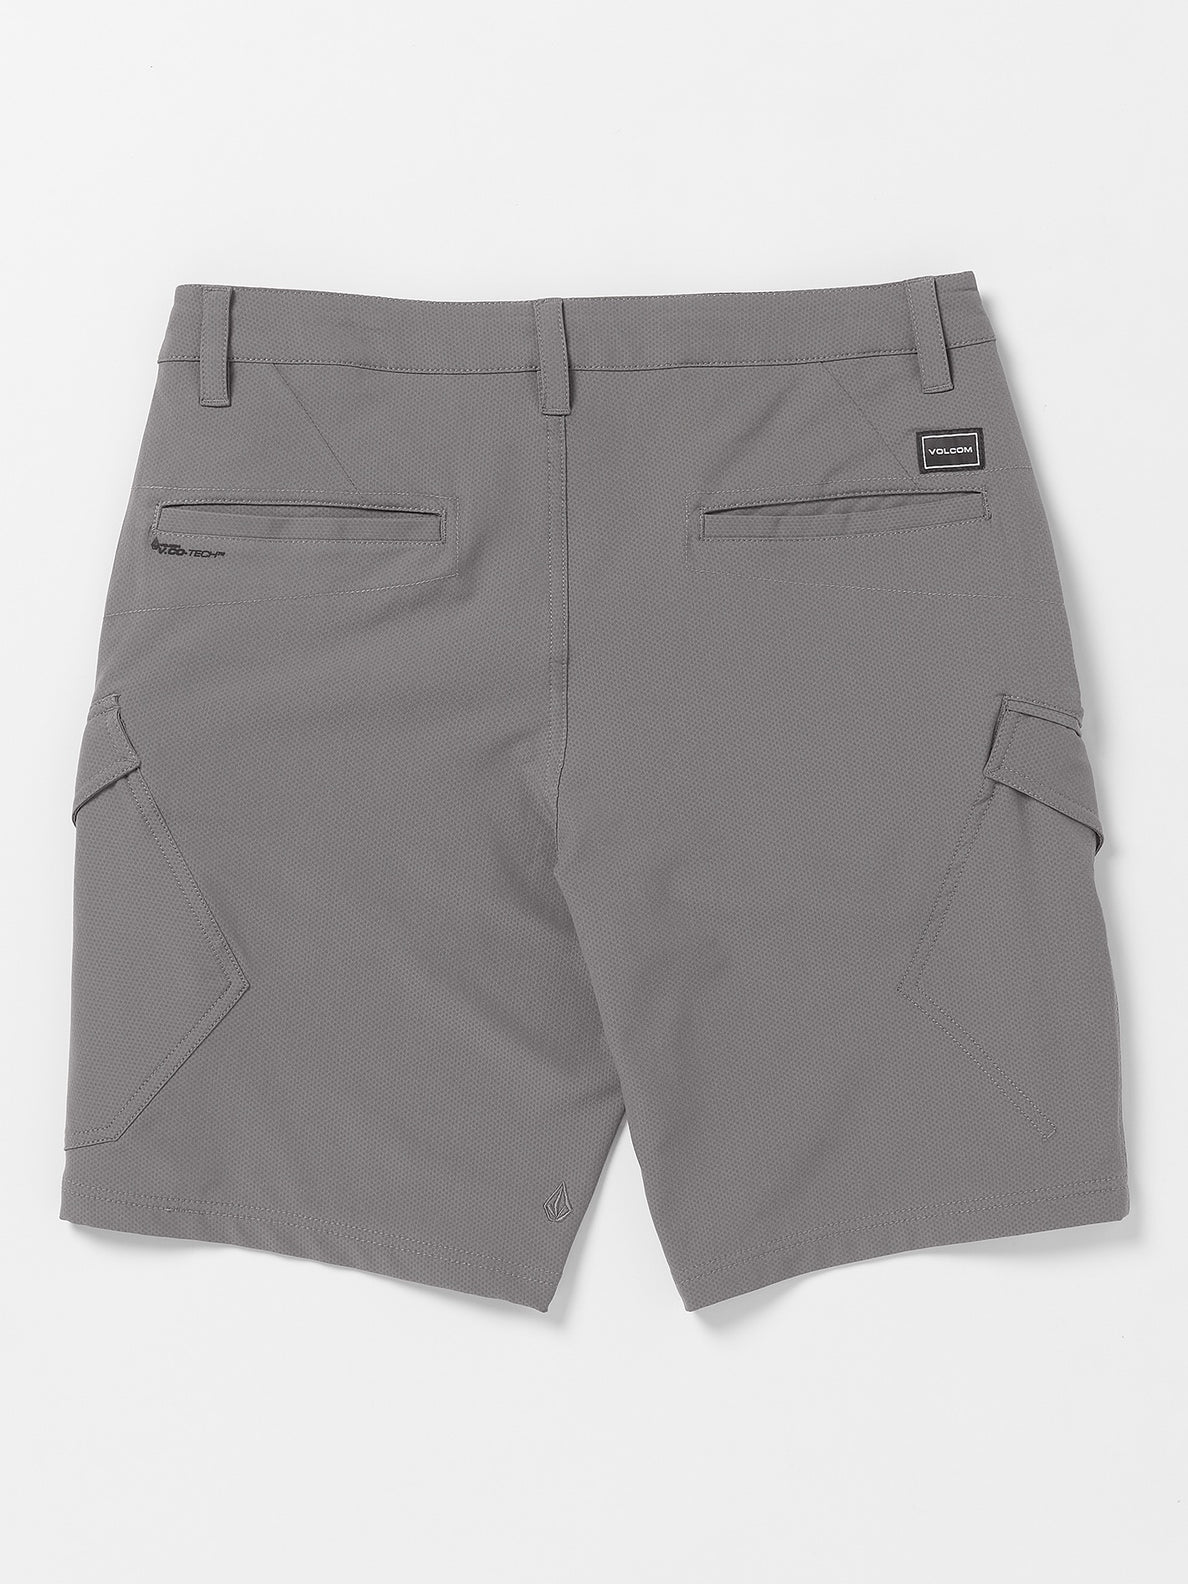 Country Days Hybrid Shorts - Dusk Grey